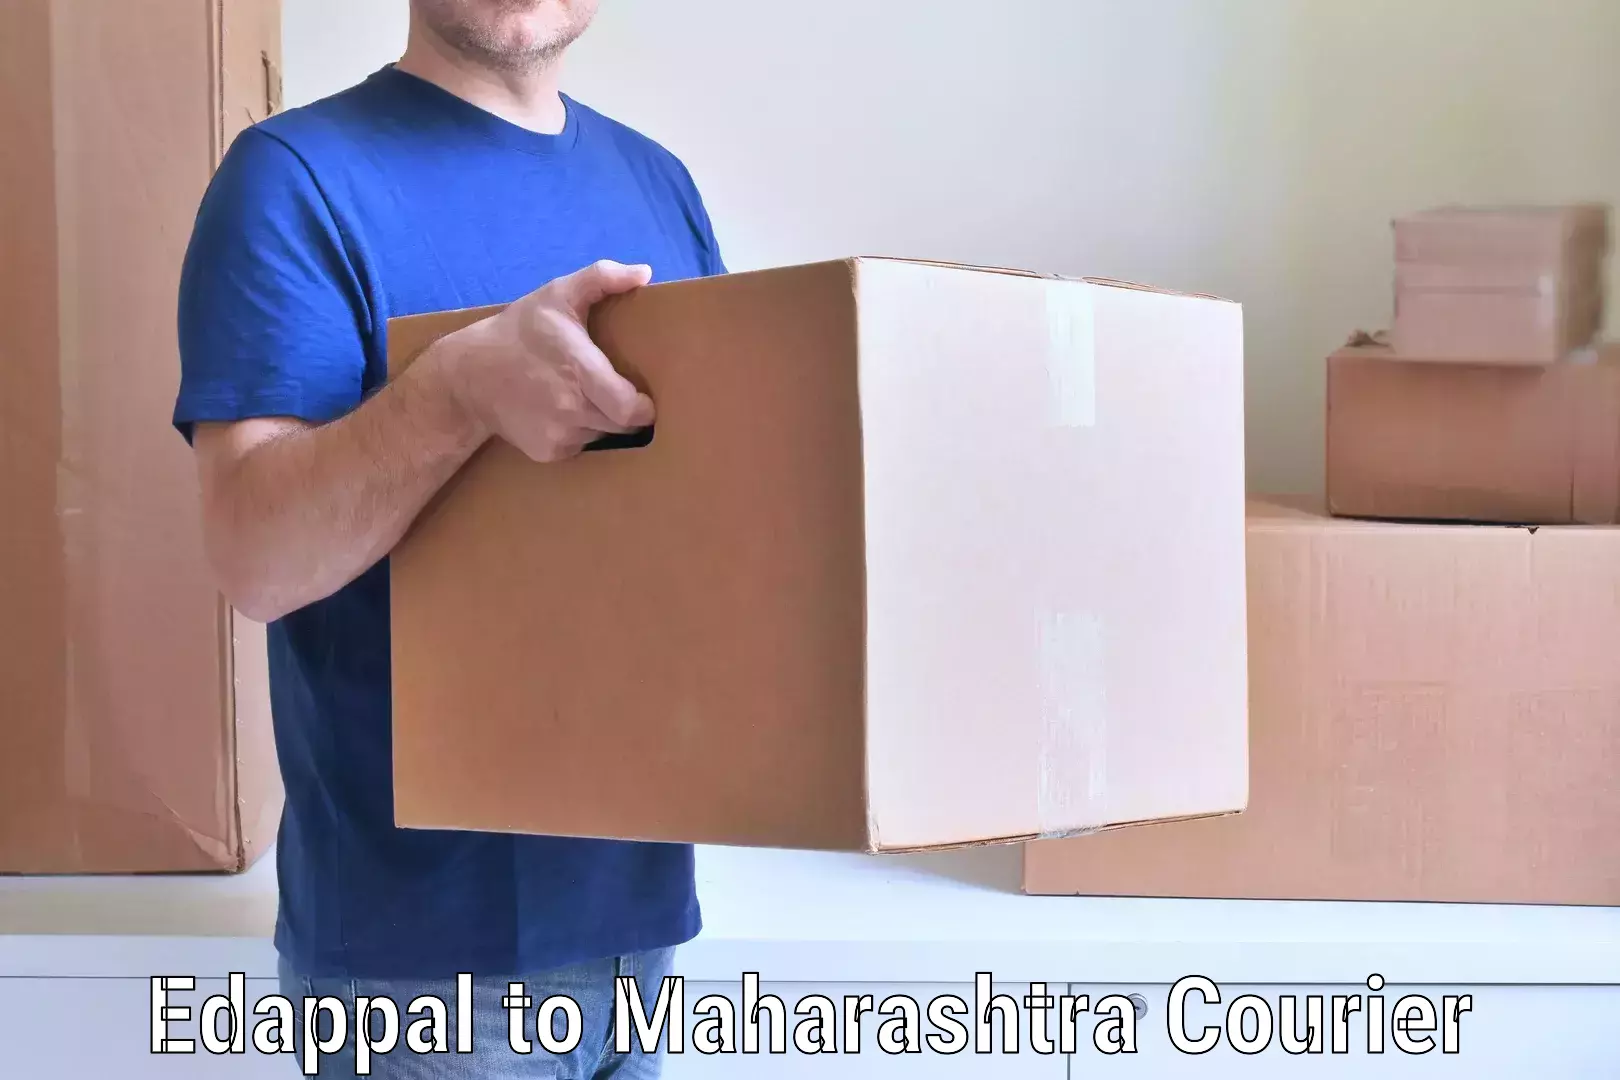 Furniture transport company Edappal to Maharashtra